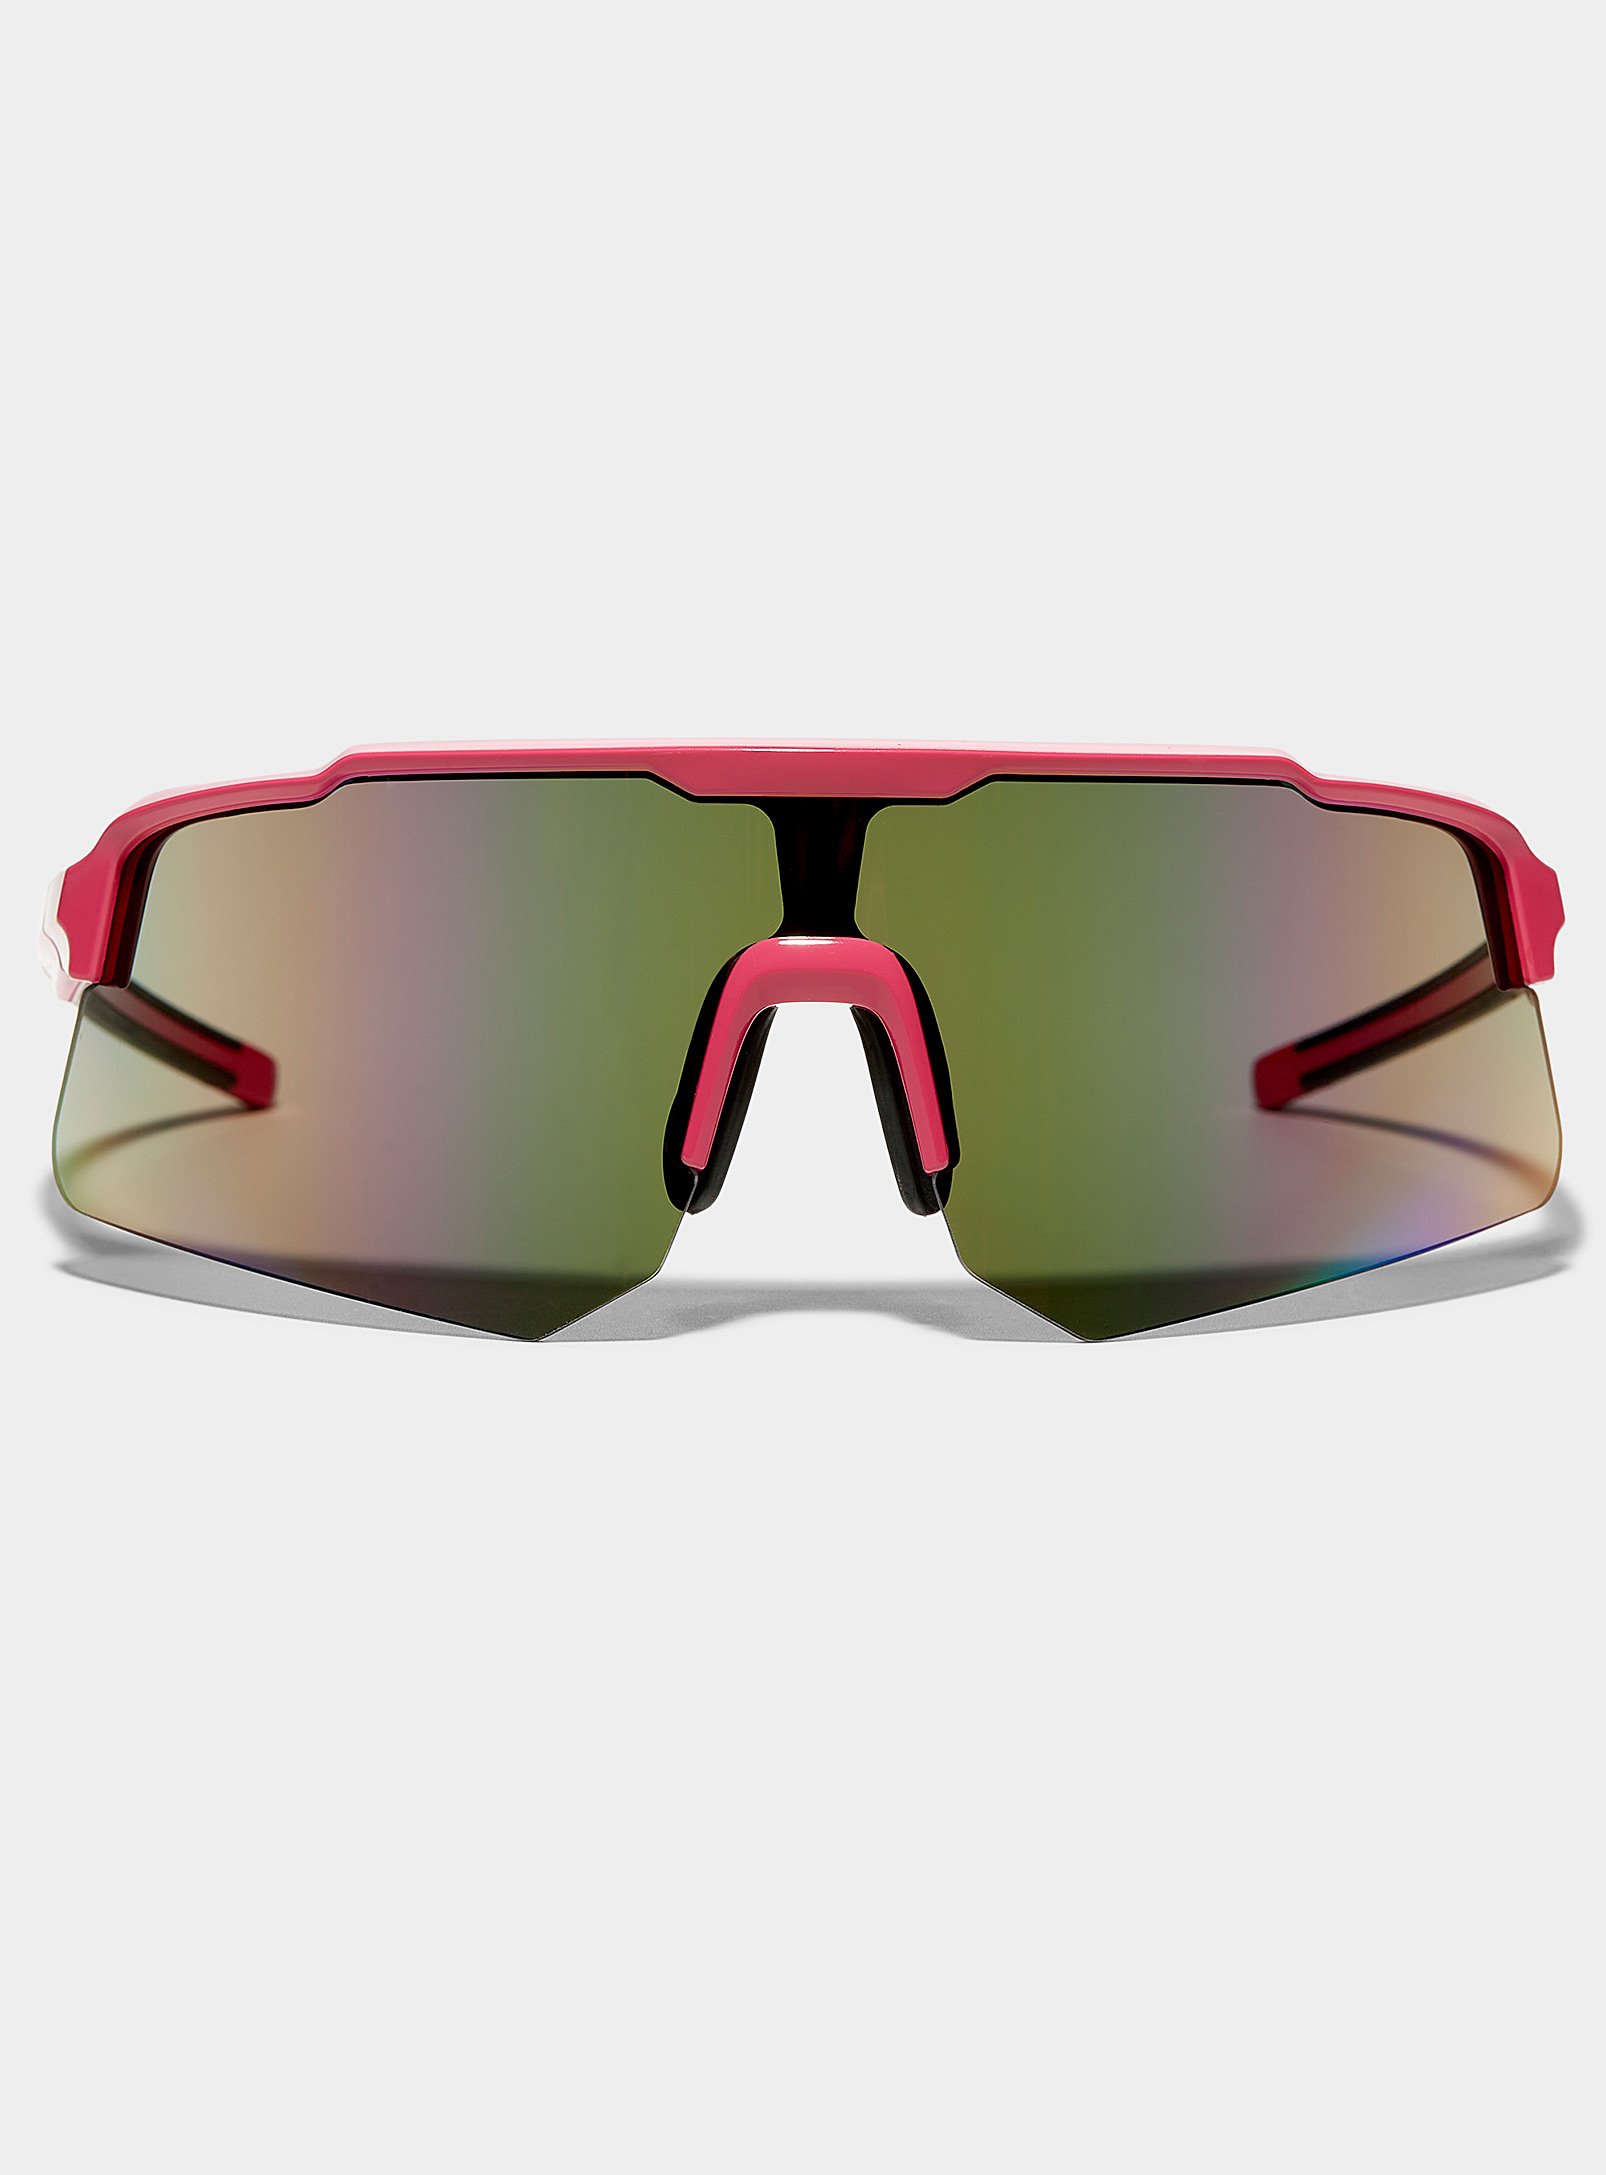 Simons - Women's Sport shield sunglasses